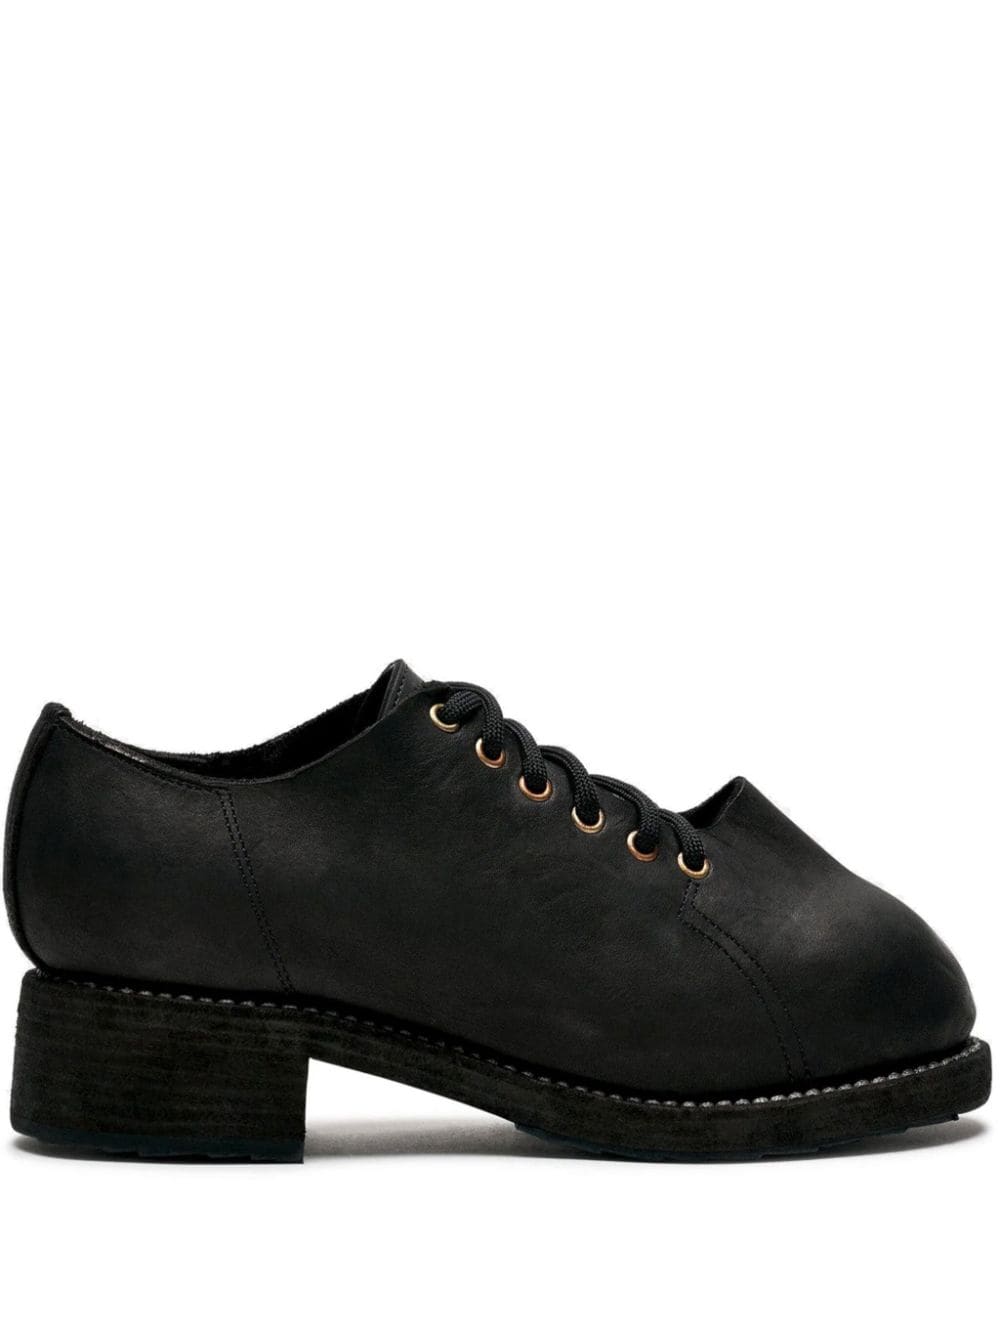 Guidi 2091 Groppone derby shoes - Nero